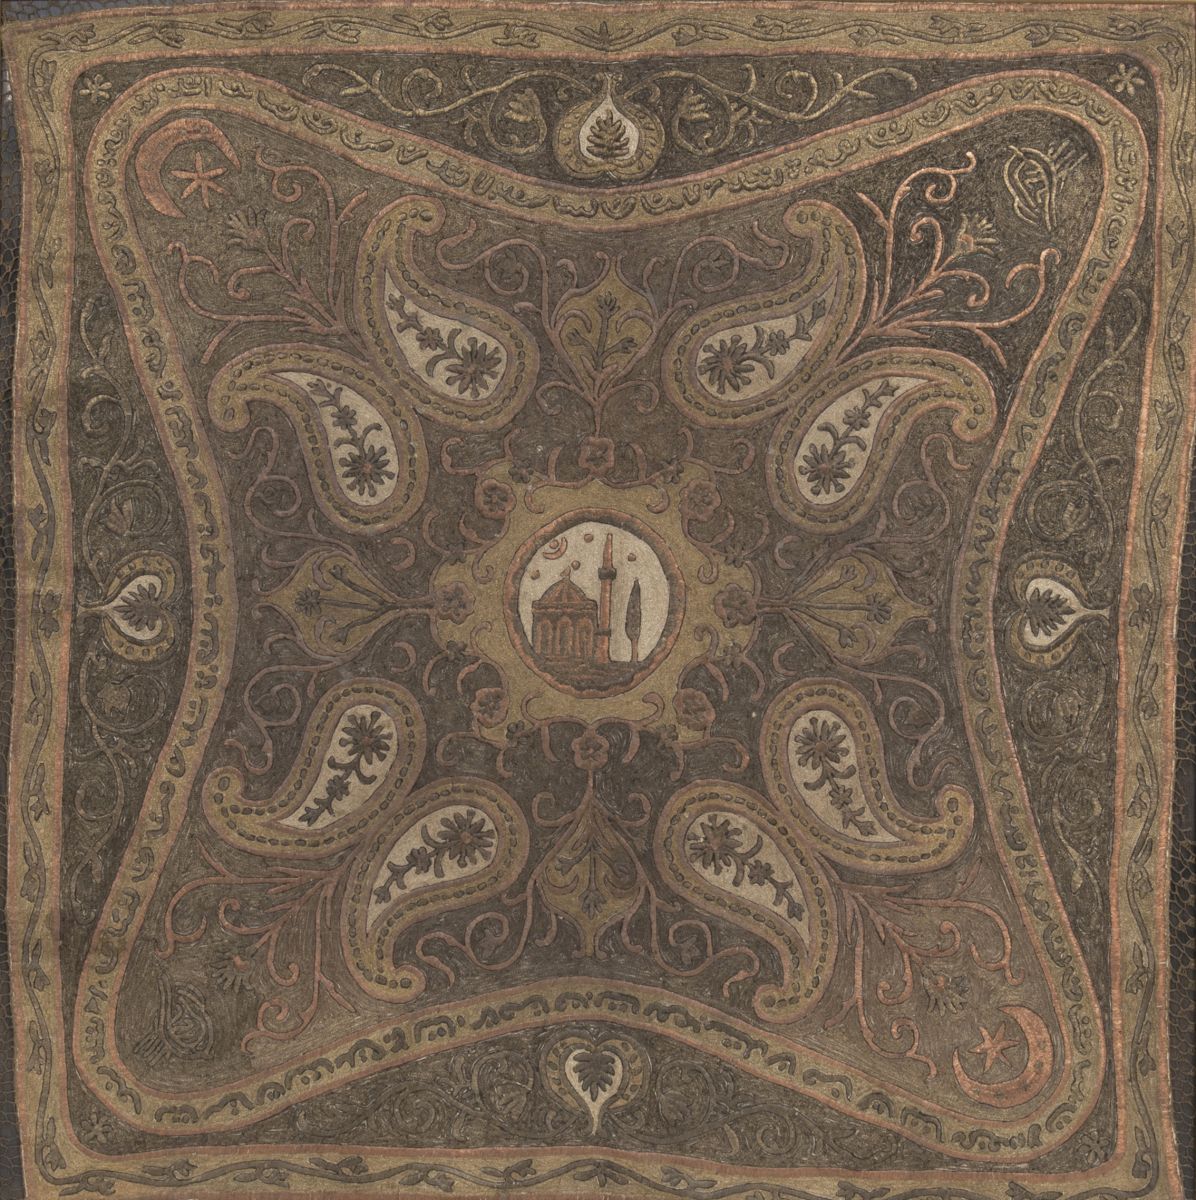 An Ottoman Brocade Embroidery